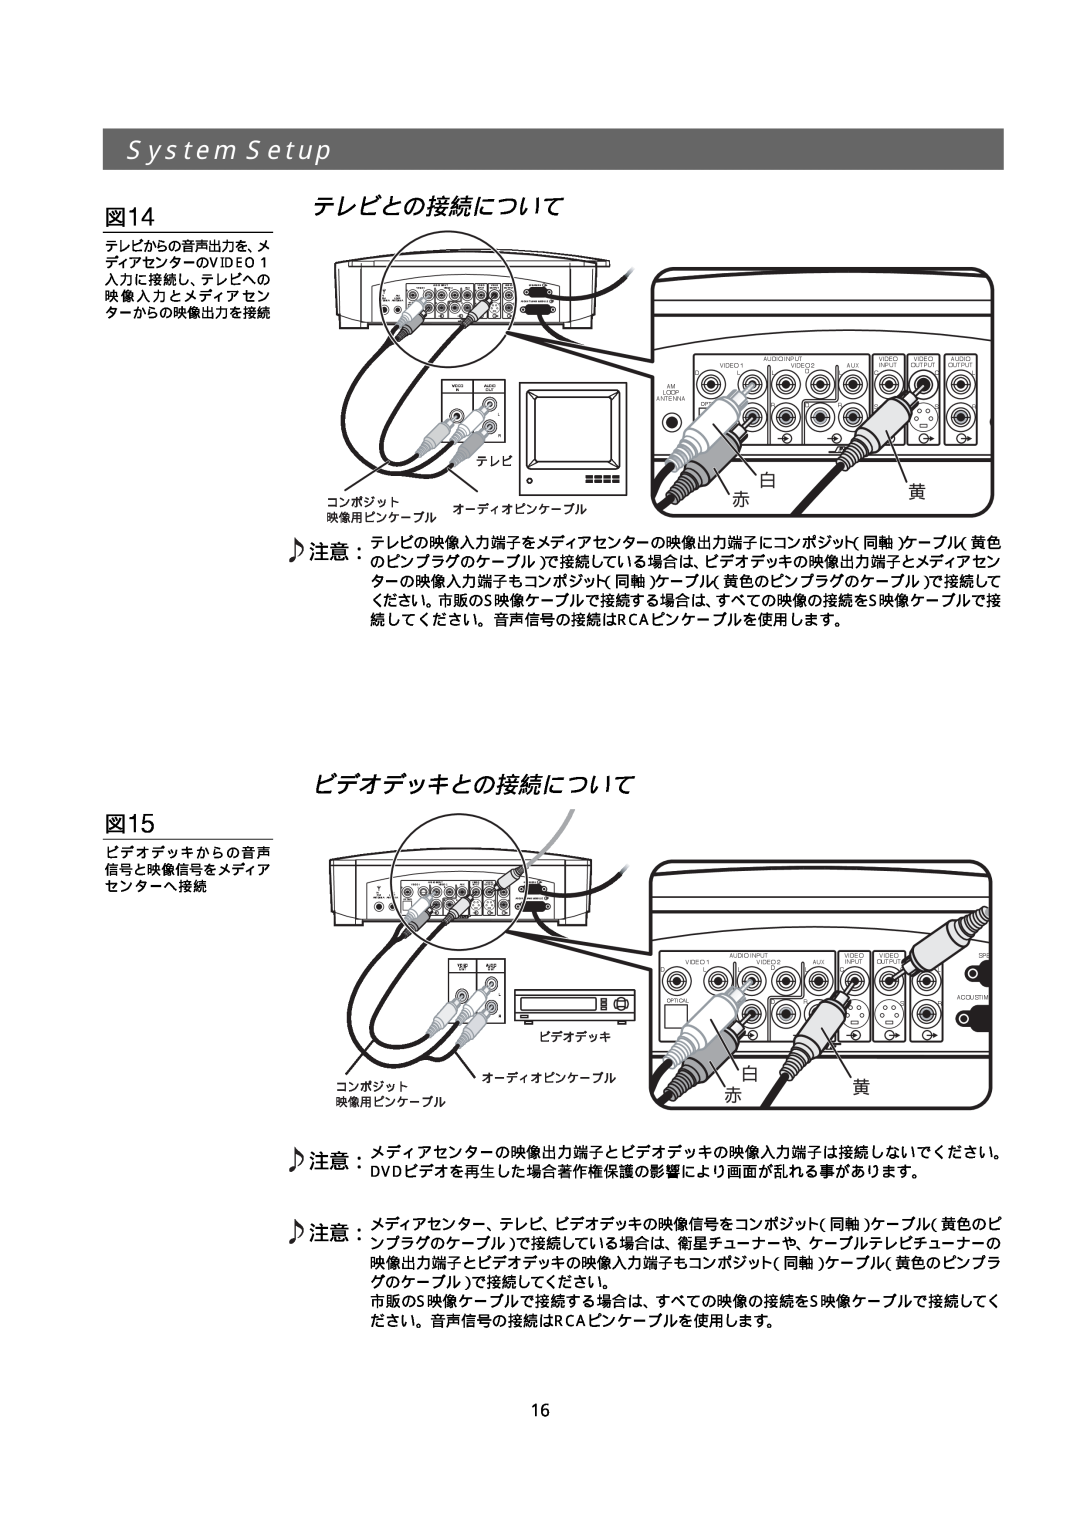 Bose 321GS owner manual テレビとの接続について, ビデオデッキとの接続について, System Setup, 白 赤黄, 白 赤 黄 